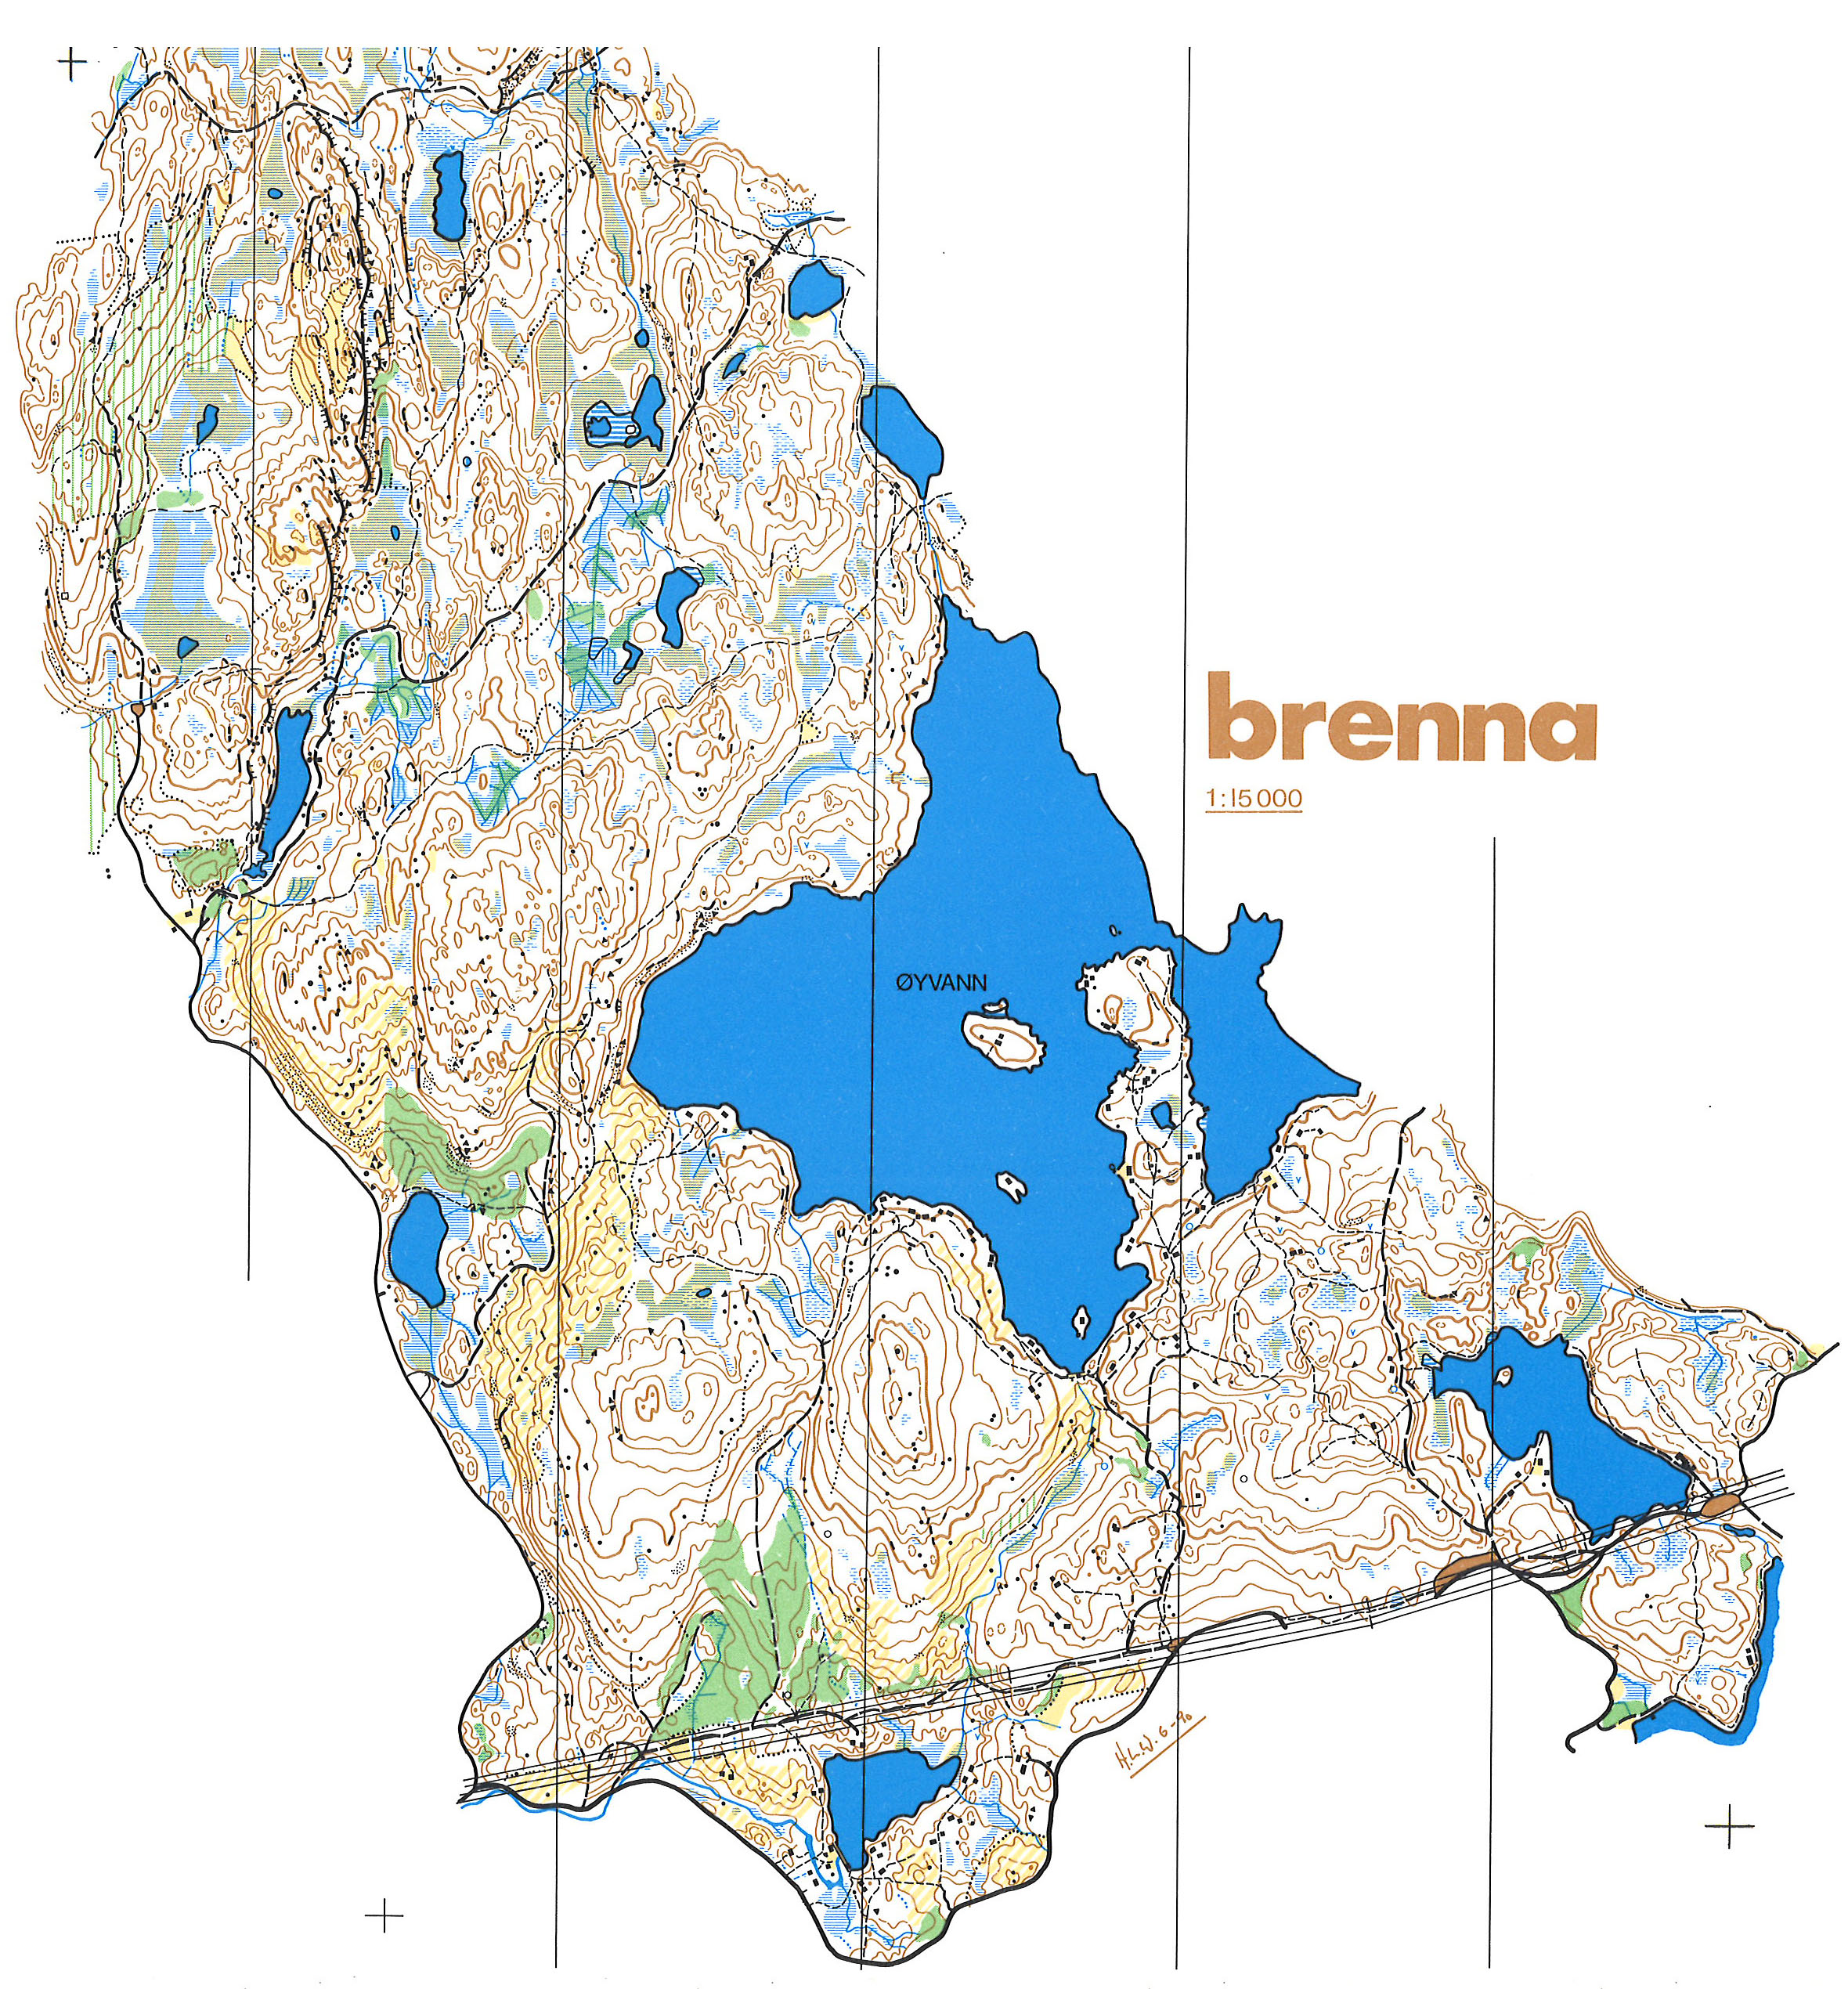 Brenna (01-01-1990)